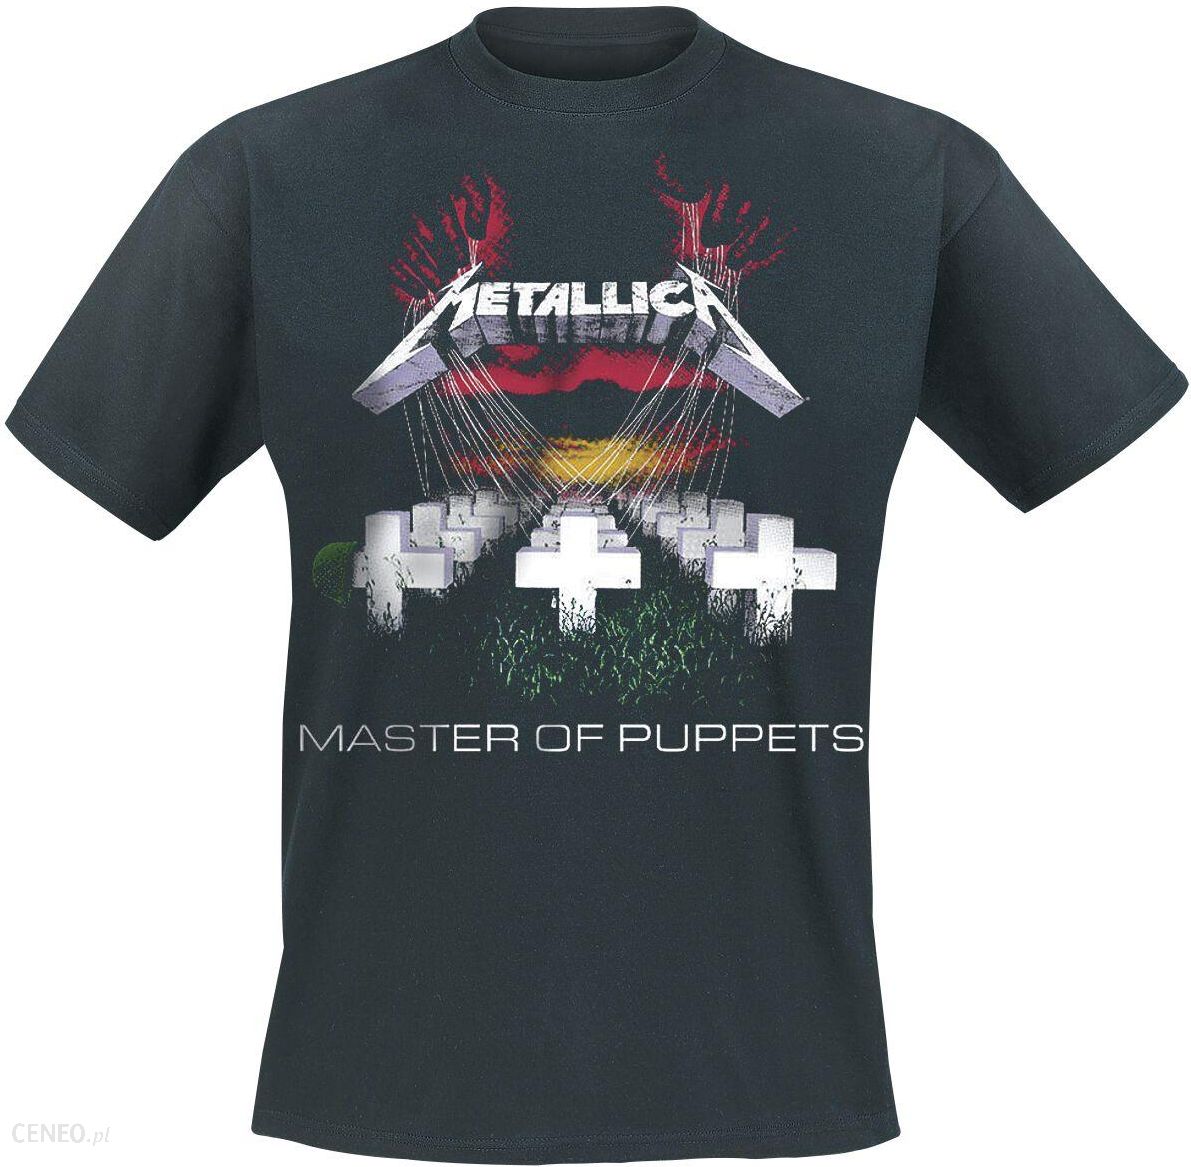 Metallica - Master Of Puppets - T-Shirt - czarny - Ceny i opinie - Ceneo.pl